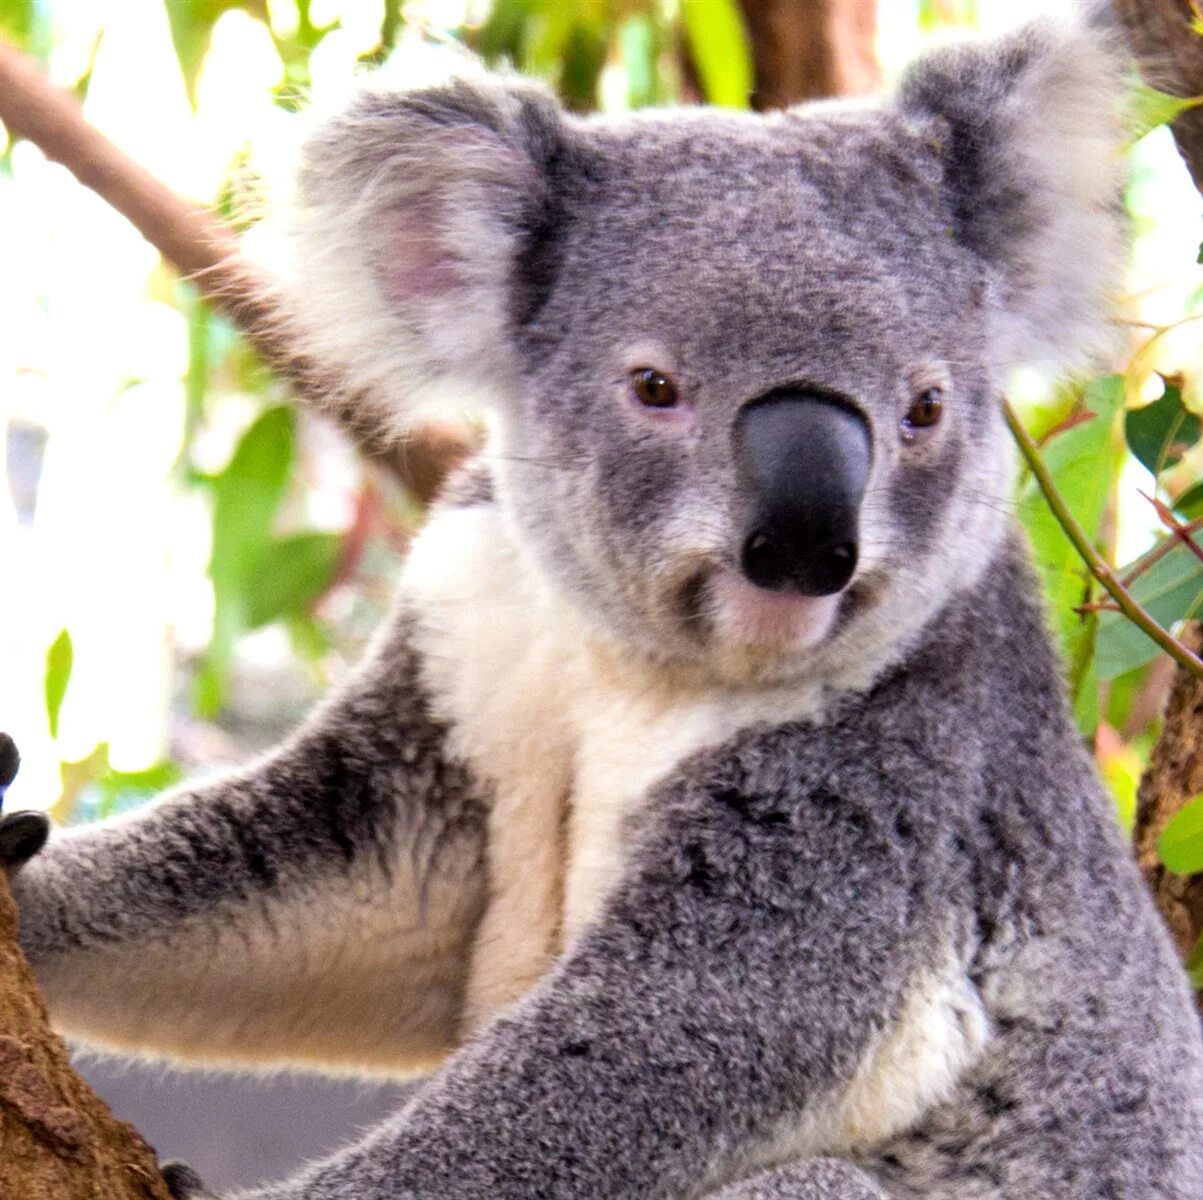 Звук коалы. Коала. Квинслендская коала. Коала сбоку. Коала анфас.